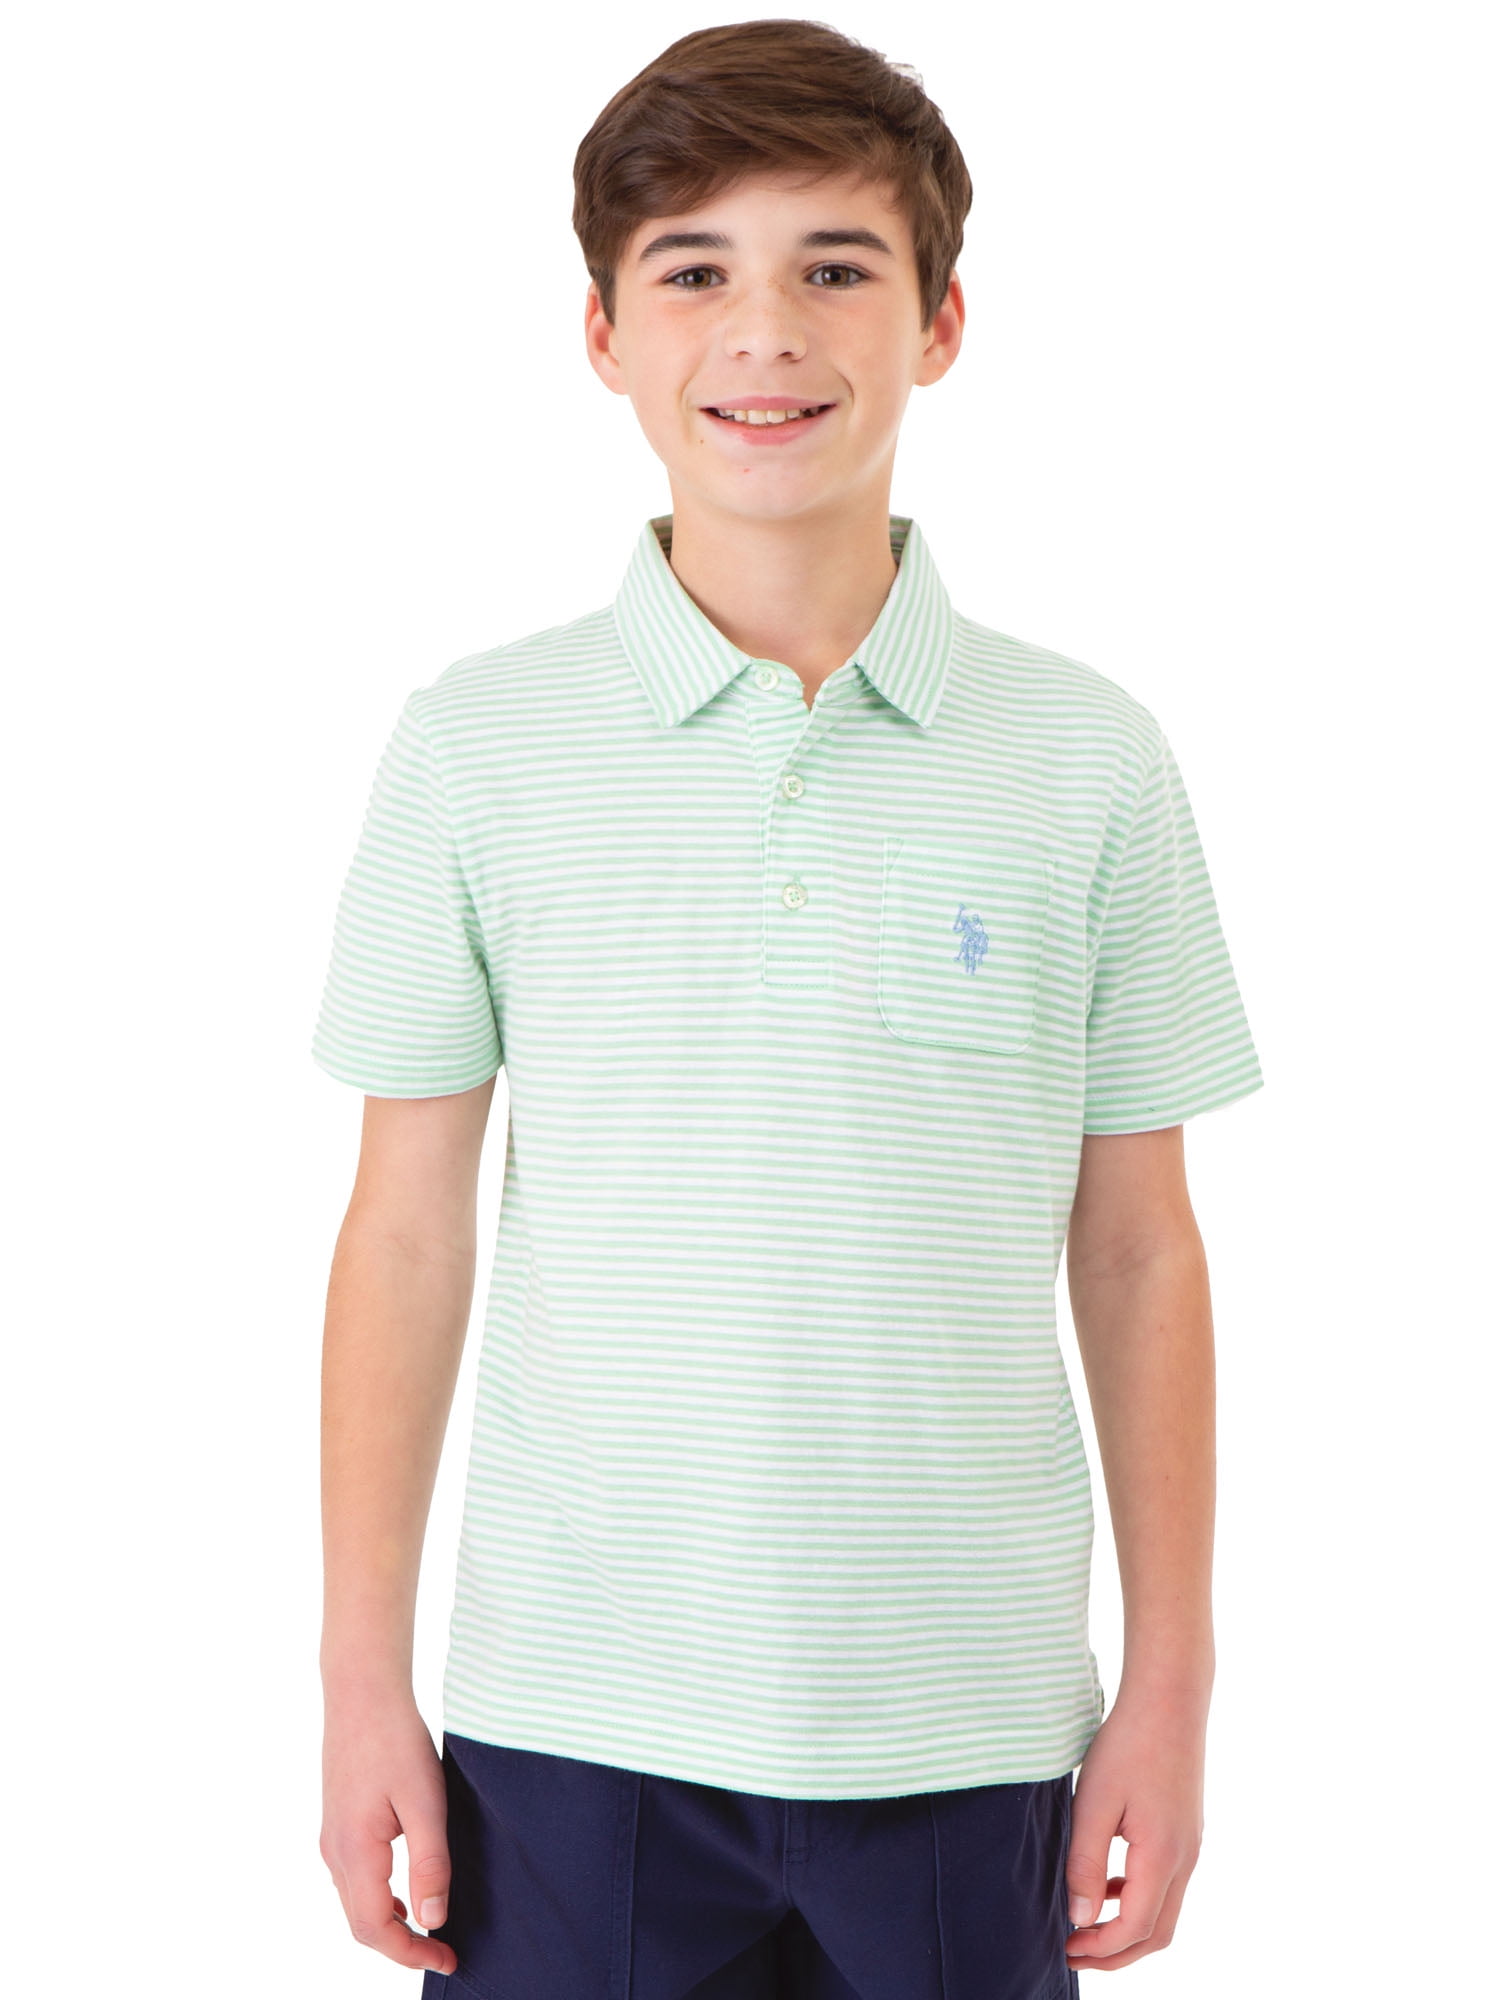 U.S. Polo Assn. Boys Striped Pocket Polo Shirt, Sizes 4-18